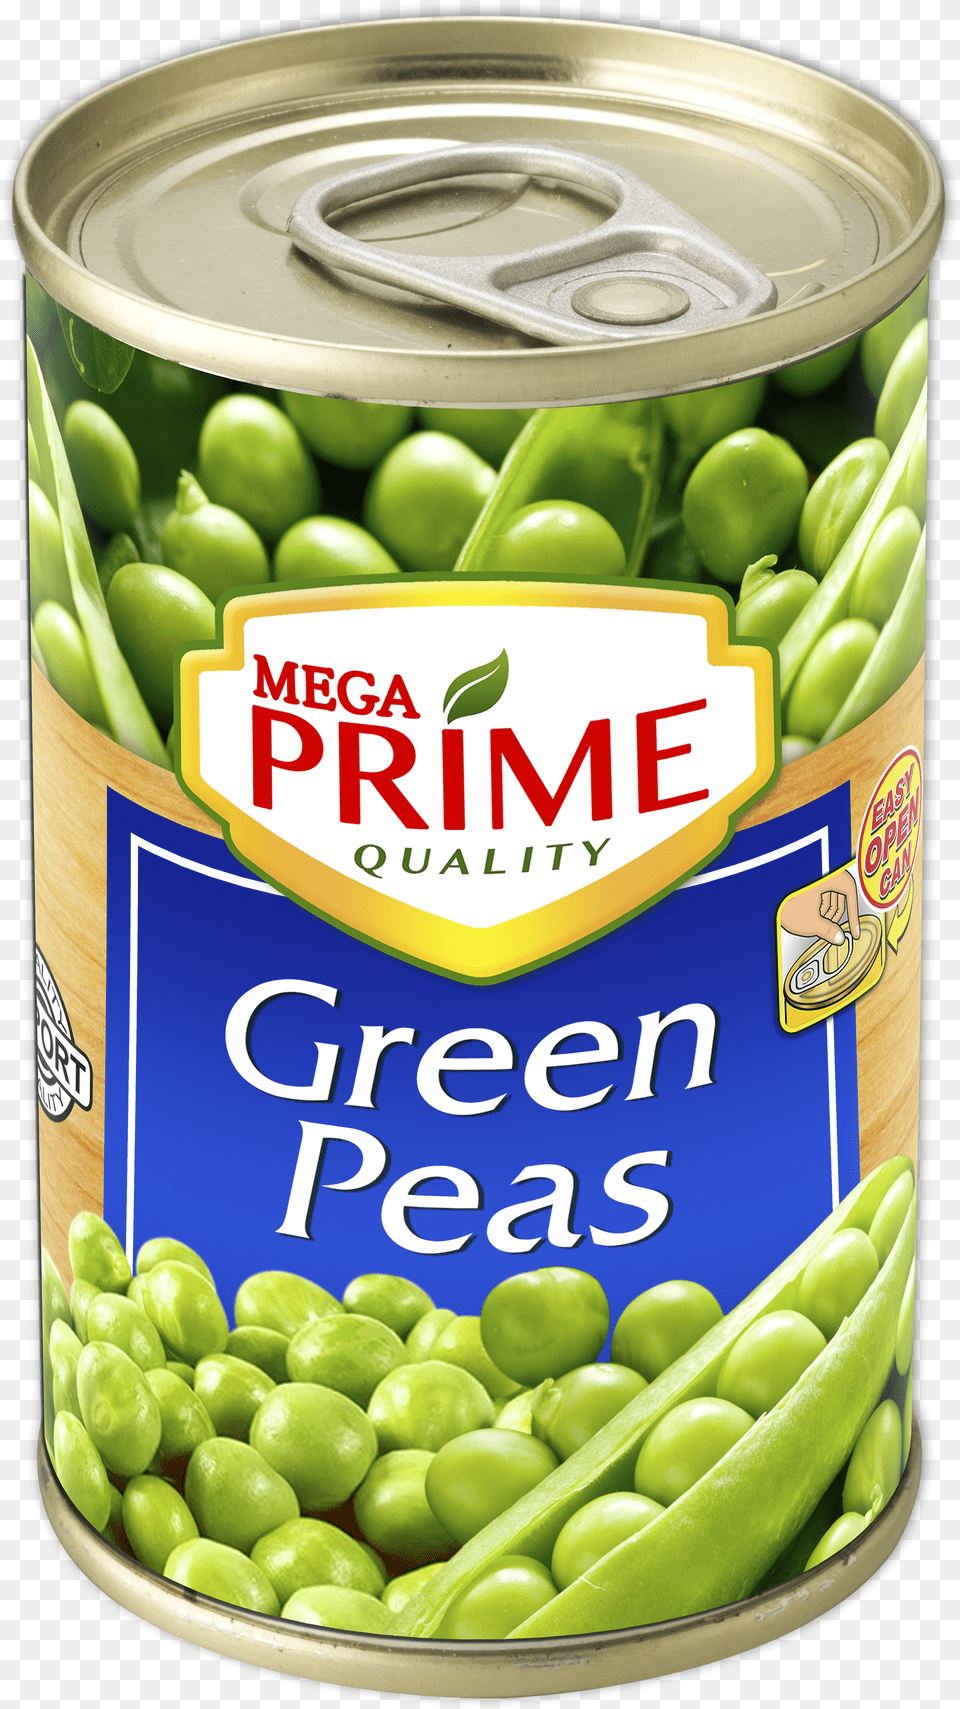 Prime Green Peas Mega Prime Green Peas Free Png